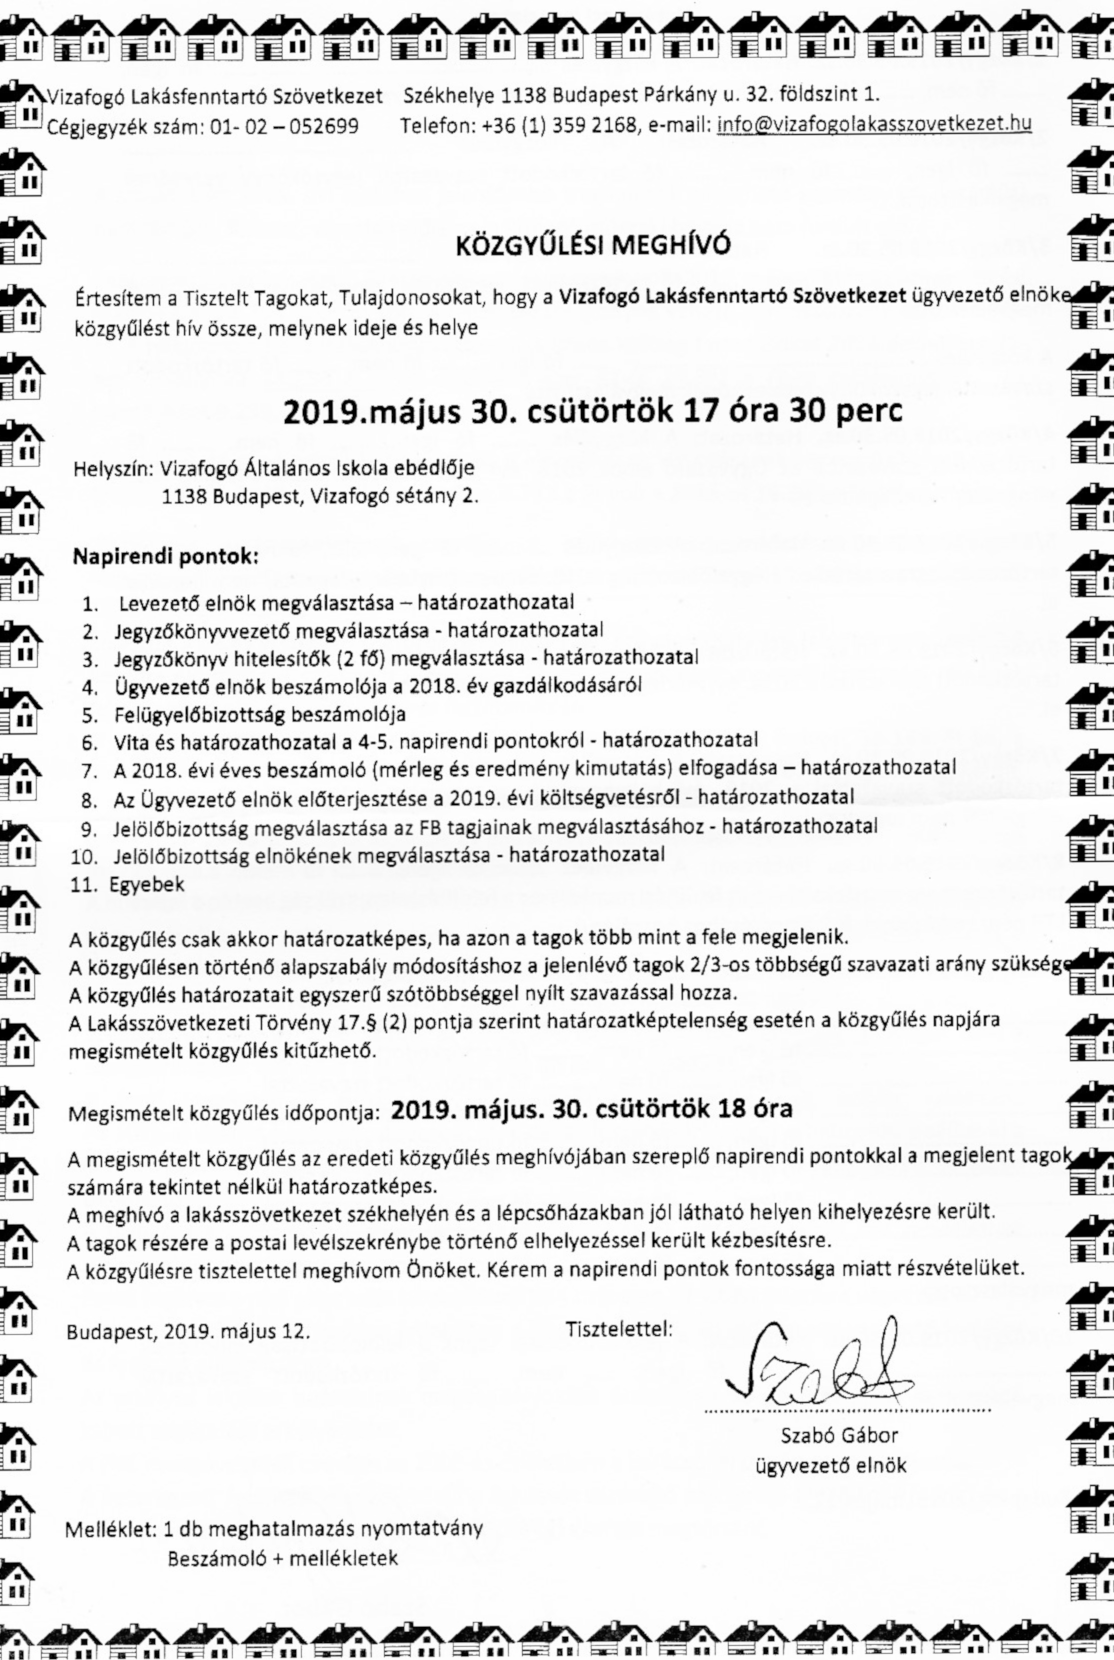 kozgyules-meghivo-20190530.png